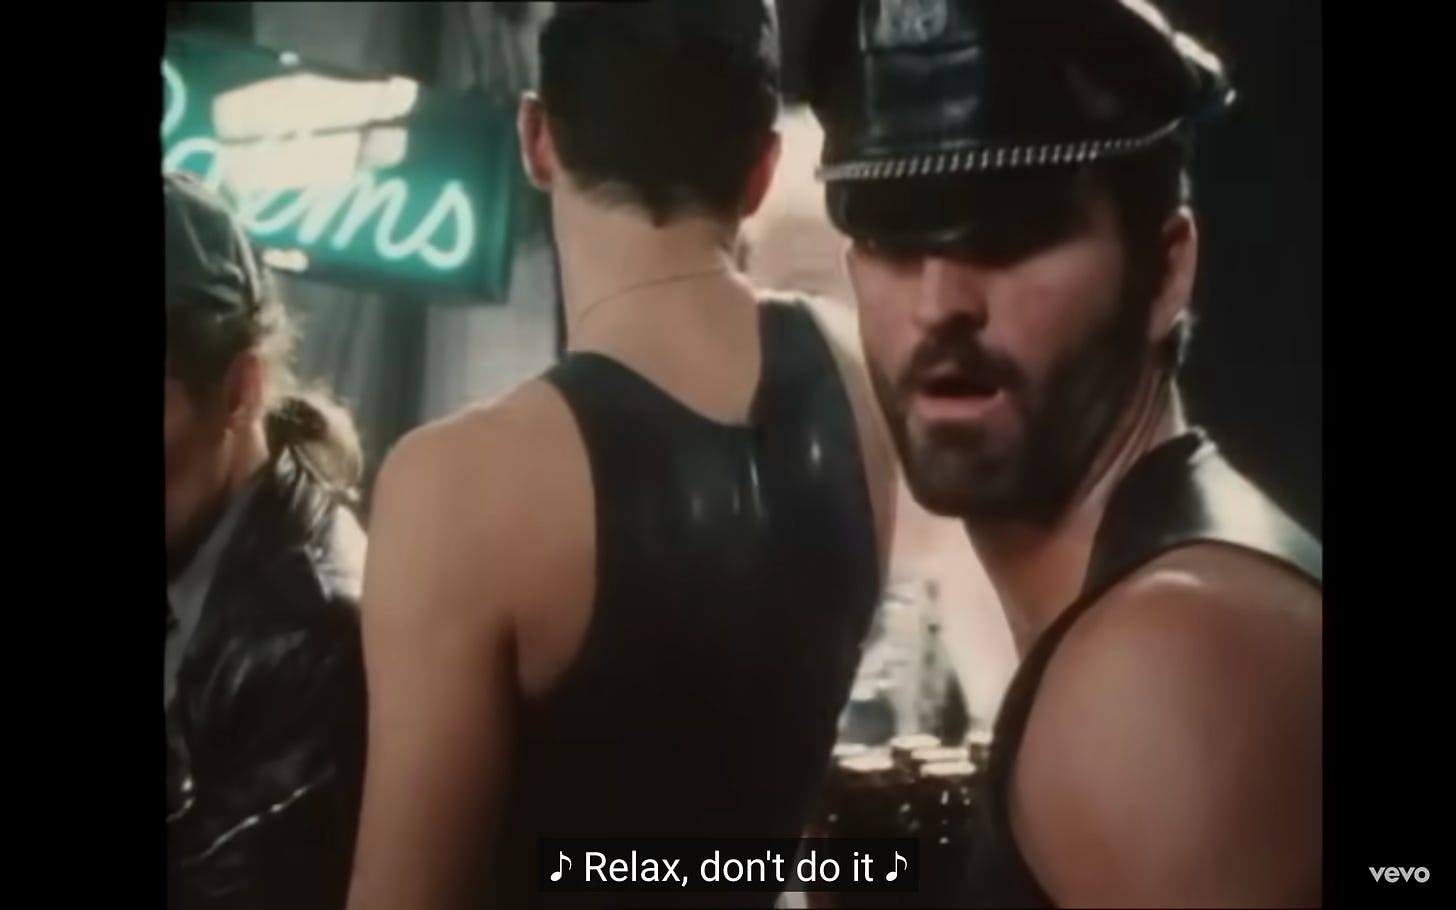 Screenshot of "Relax" music video